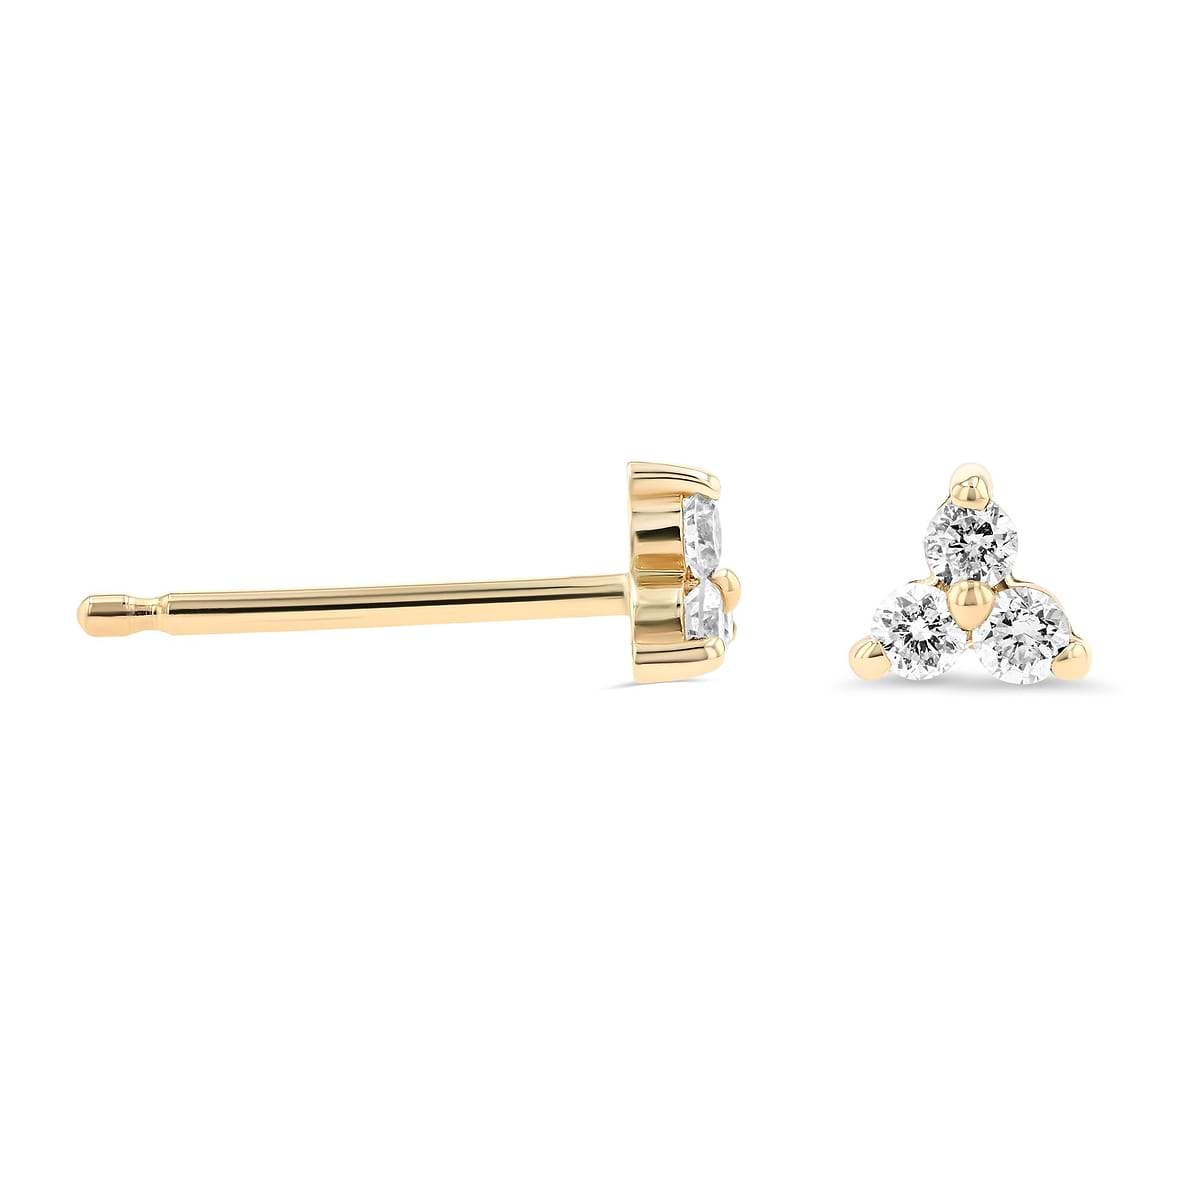 Micro Cluster Lab Grown Diamond Earrings Shown in 14K Yellow Gold